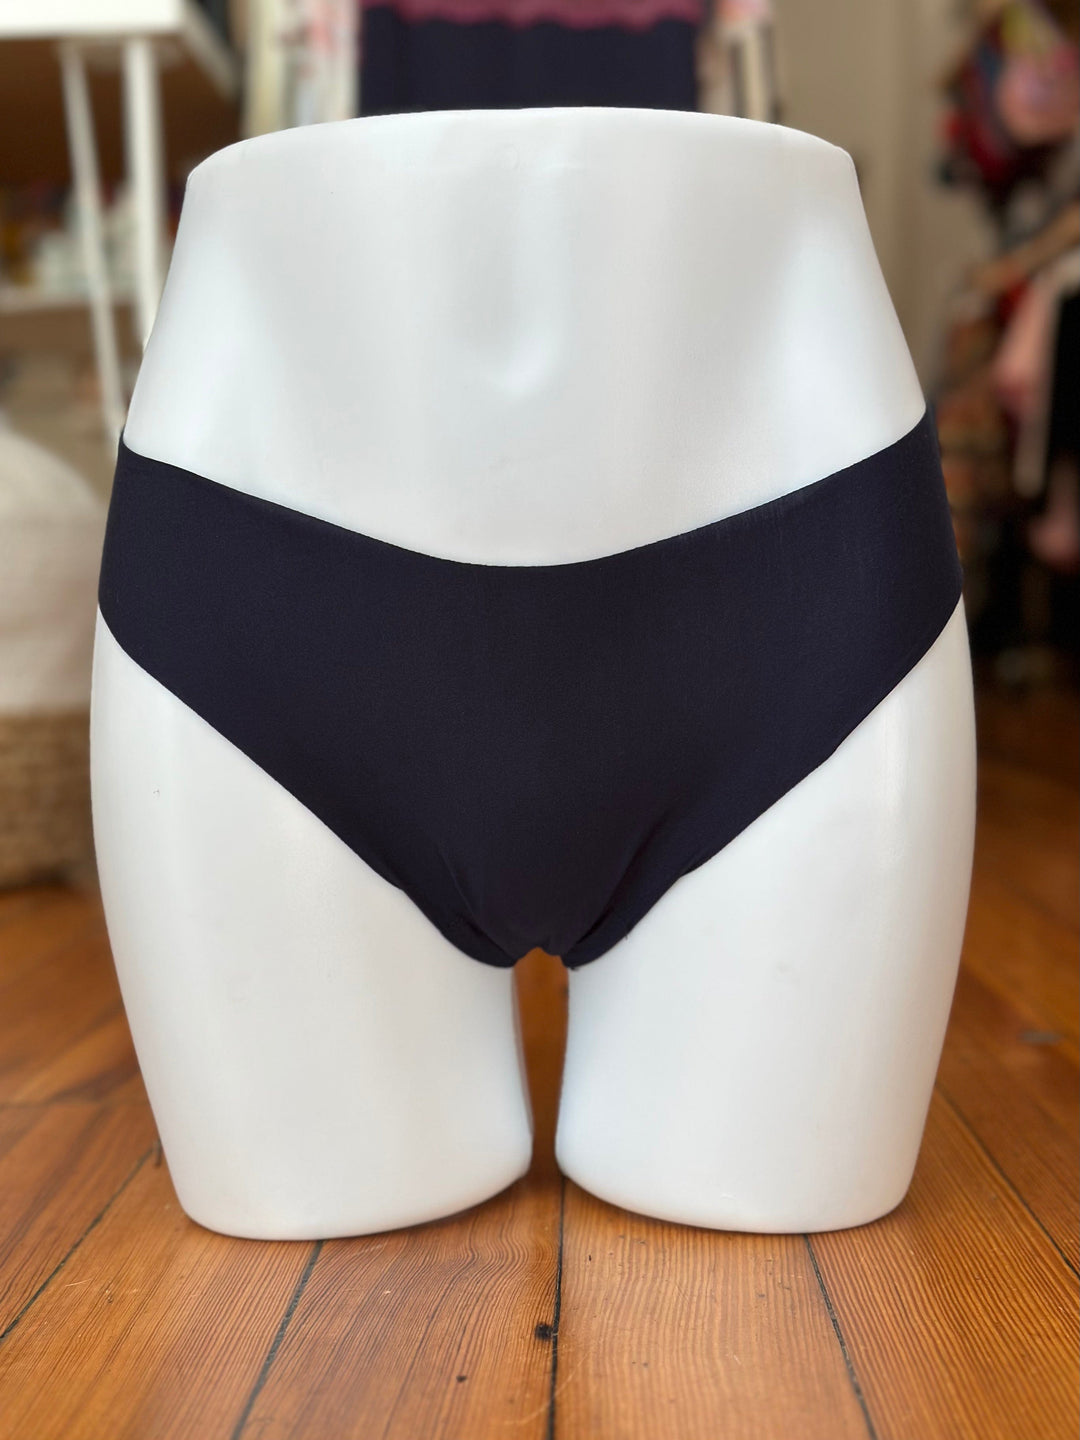 Tawop Commando Underwear for Women Corsets for Women Floral